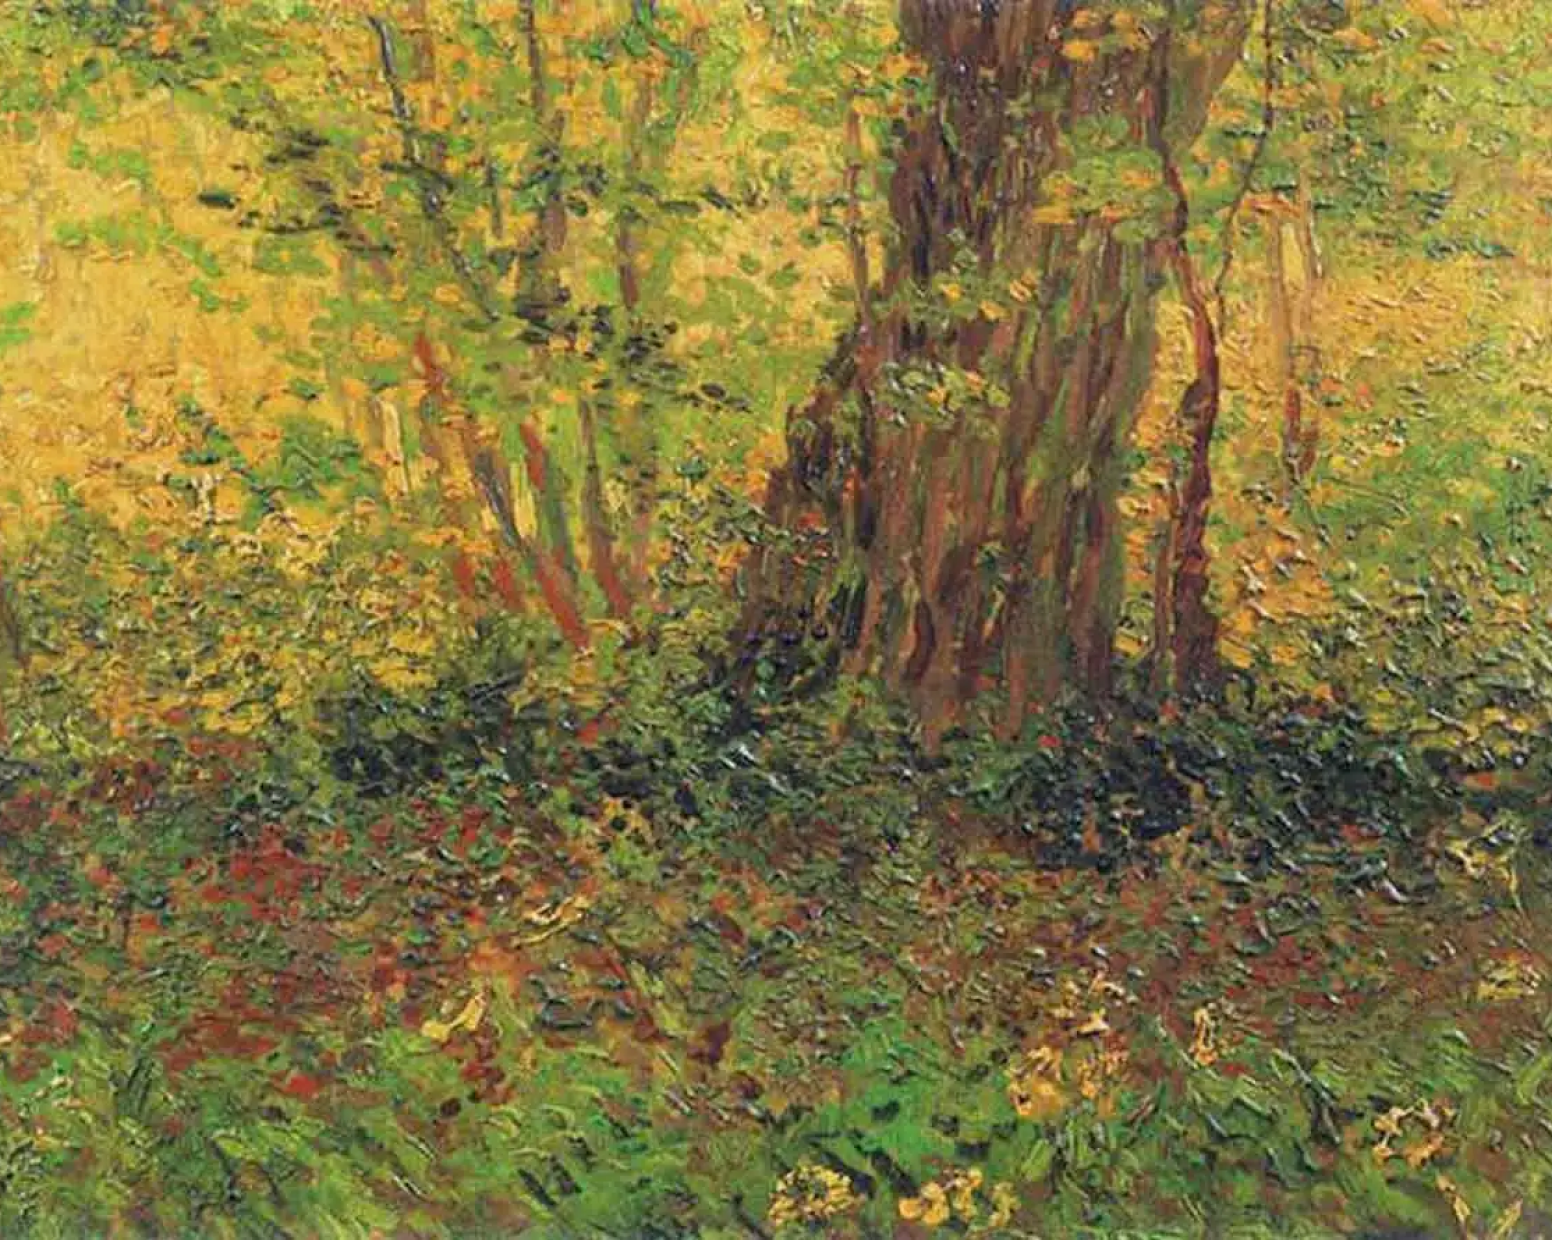 Undergrowth by Vincent van Gogh, 1887